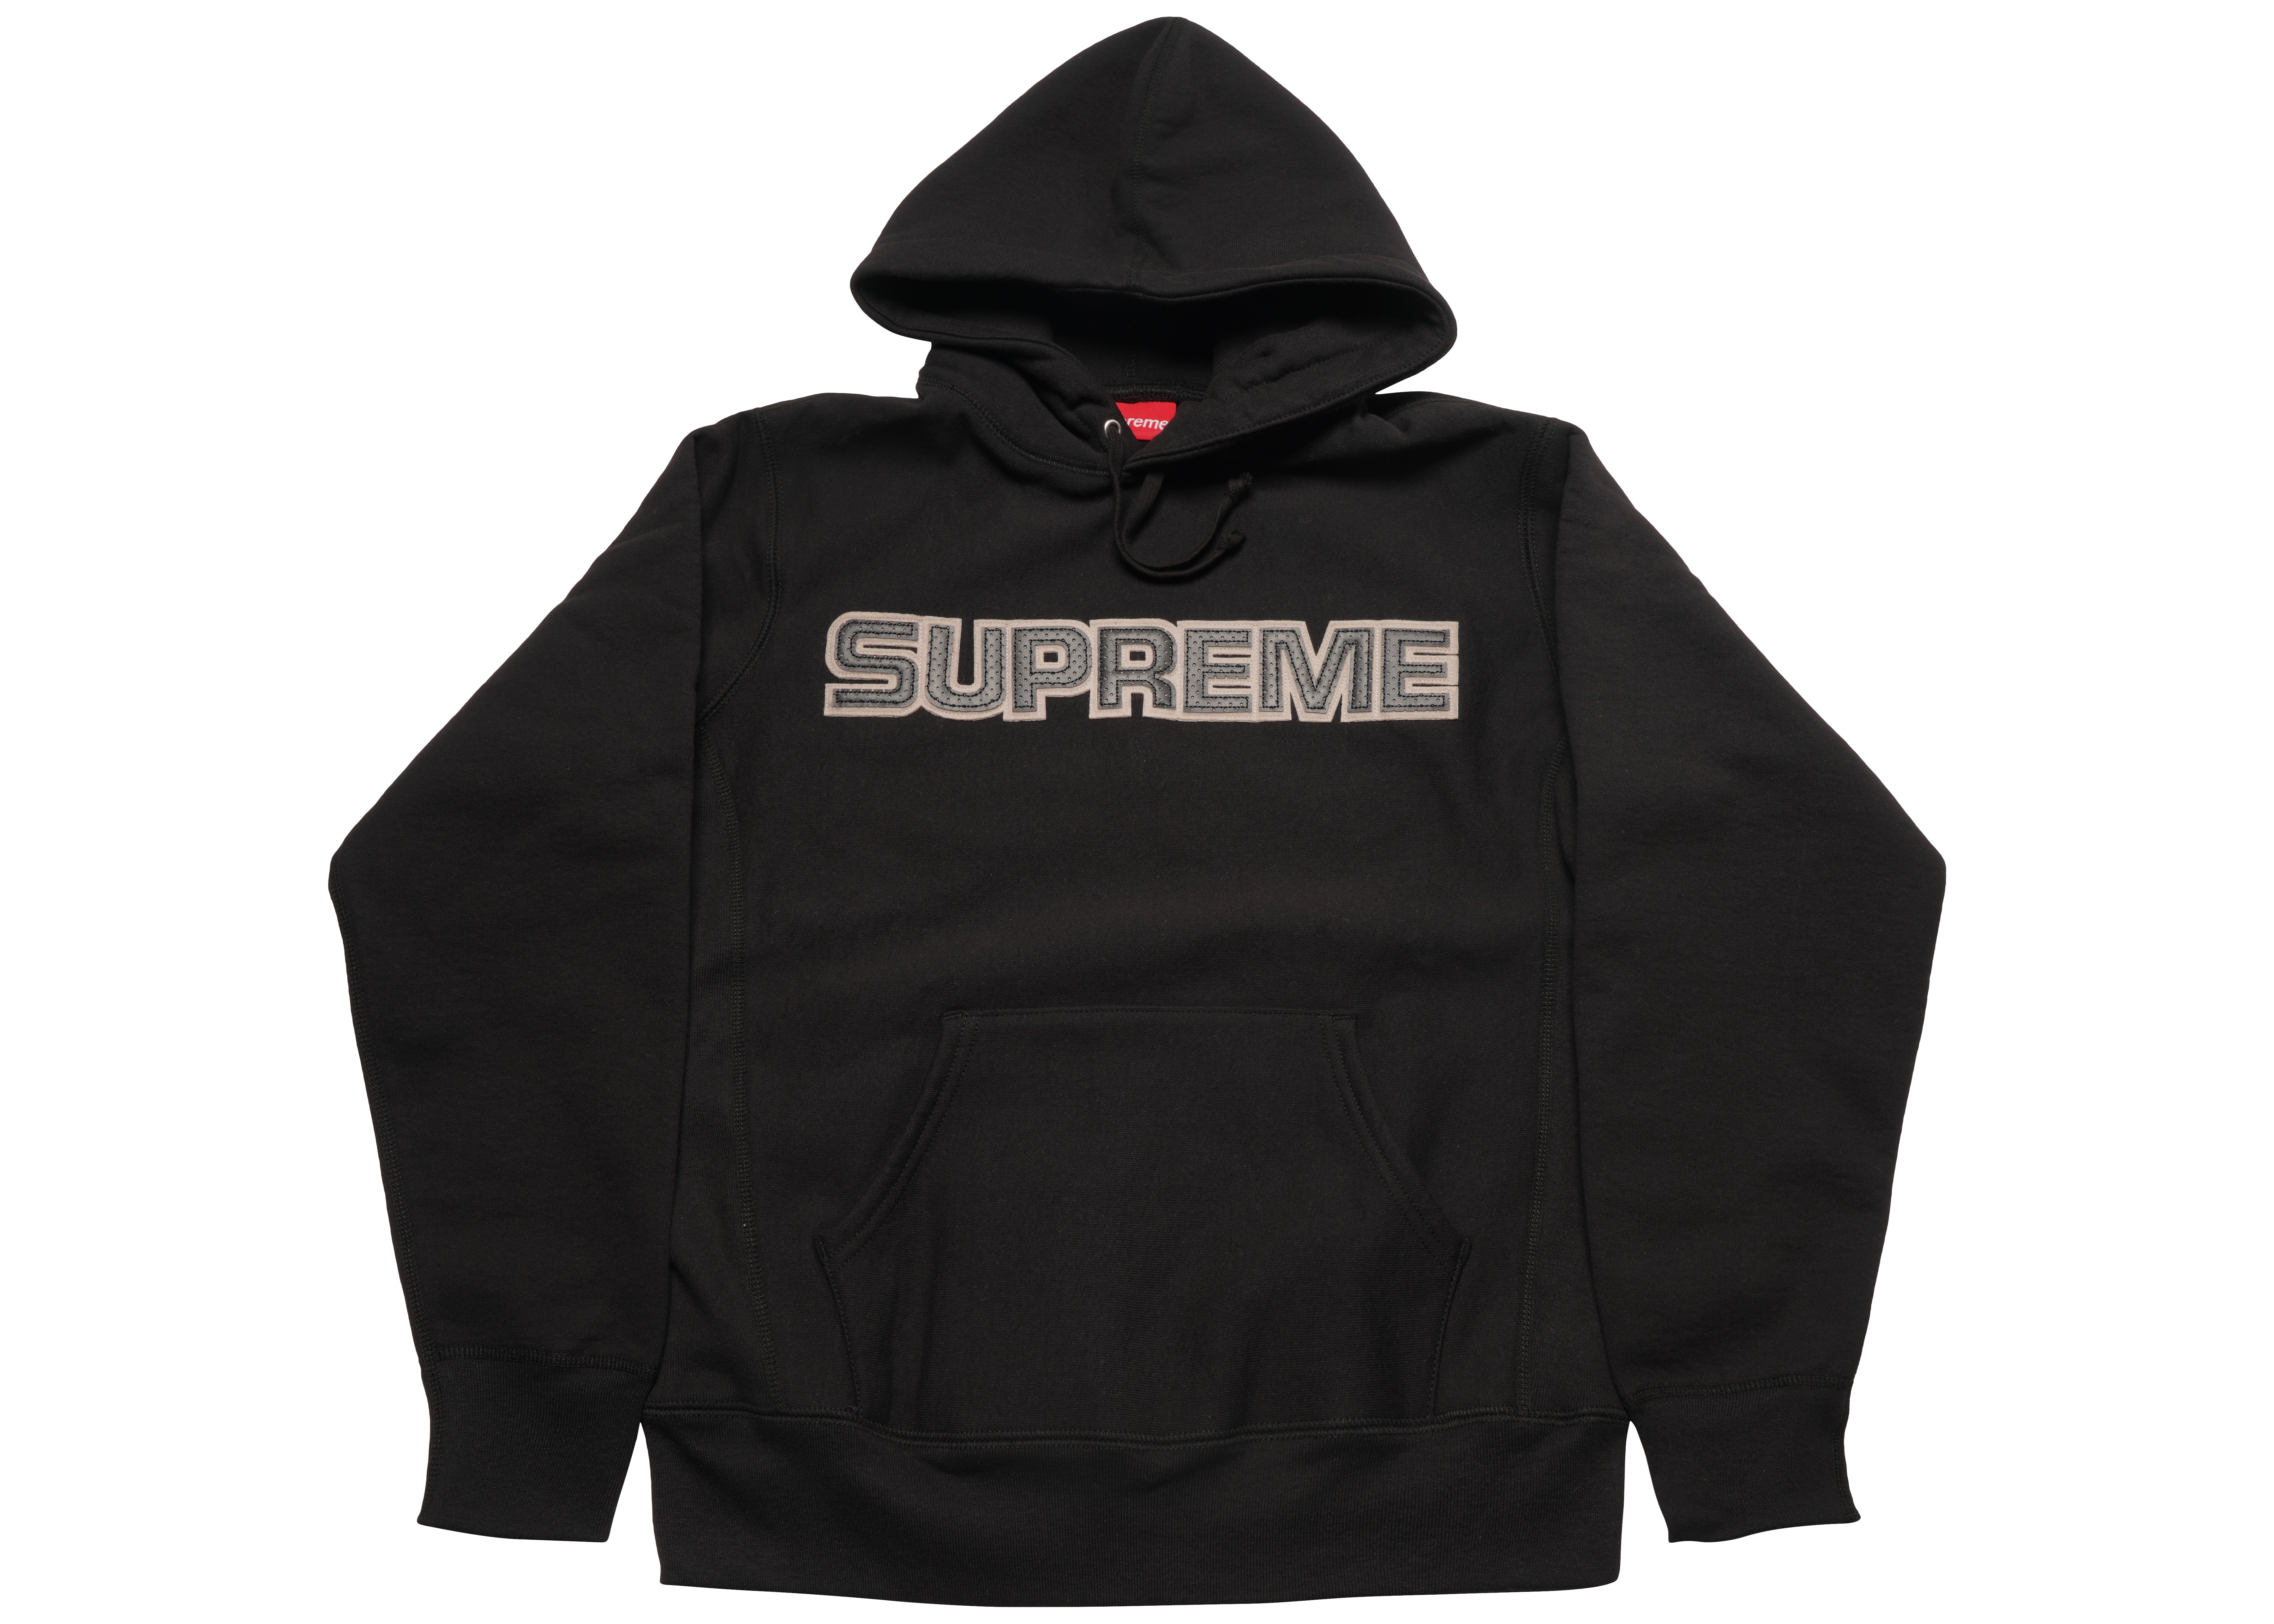 Supreme Perforated Leather Hooded Sweatshirt Black